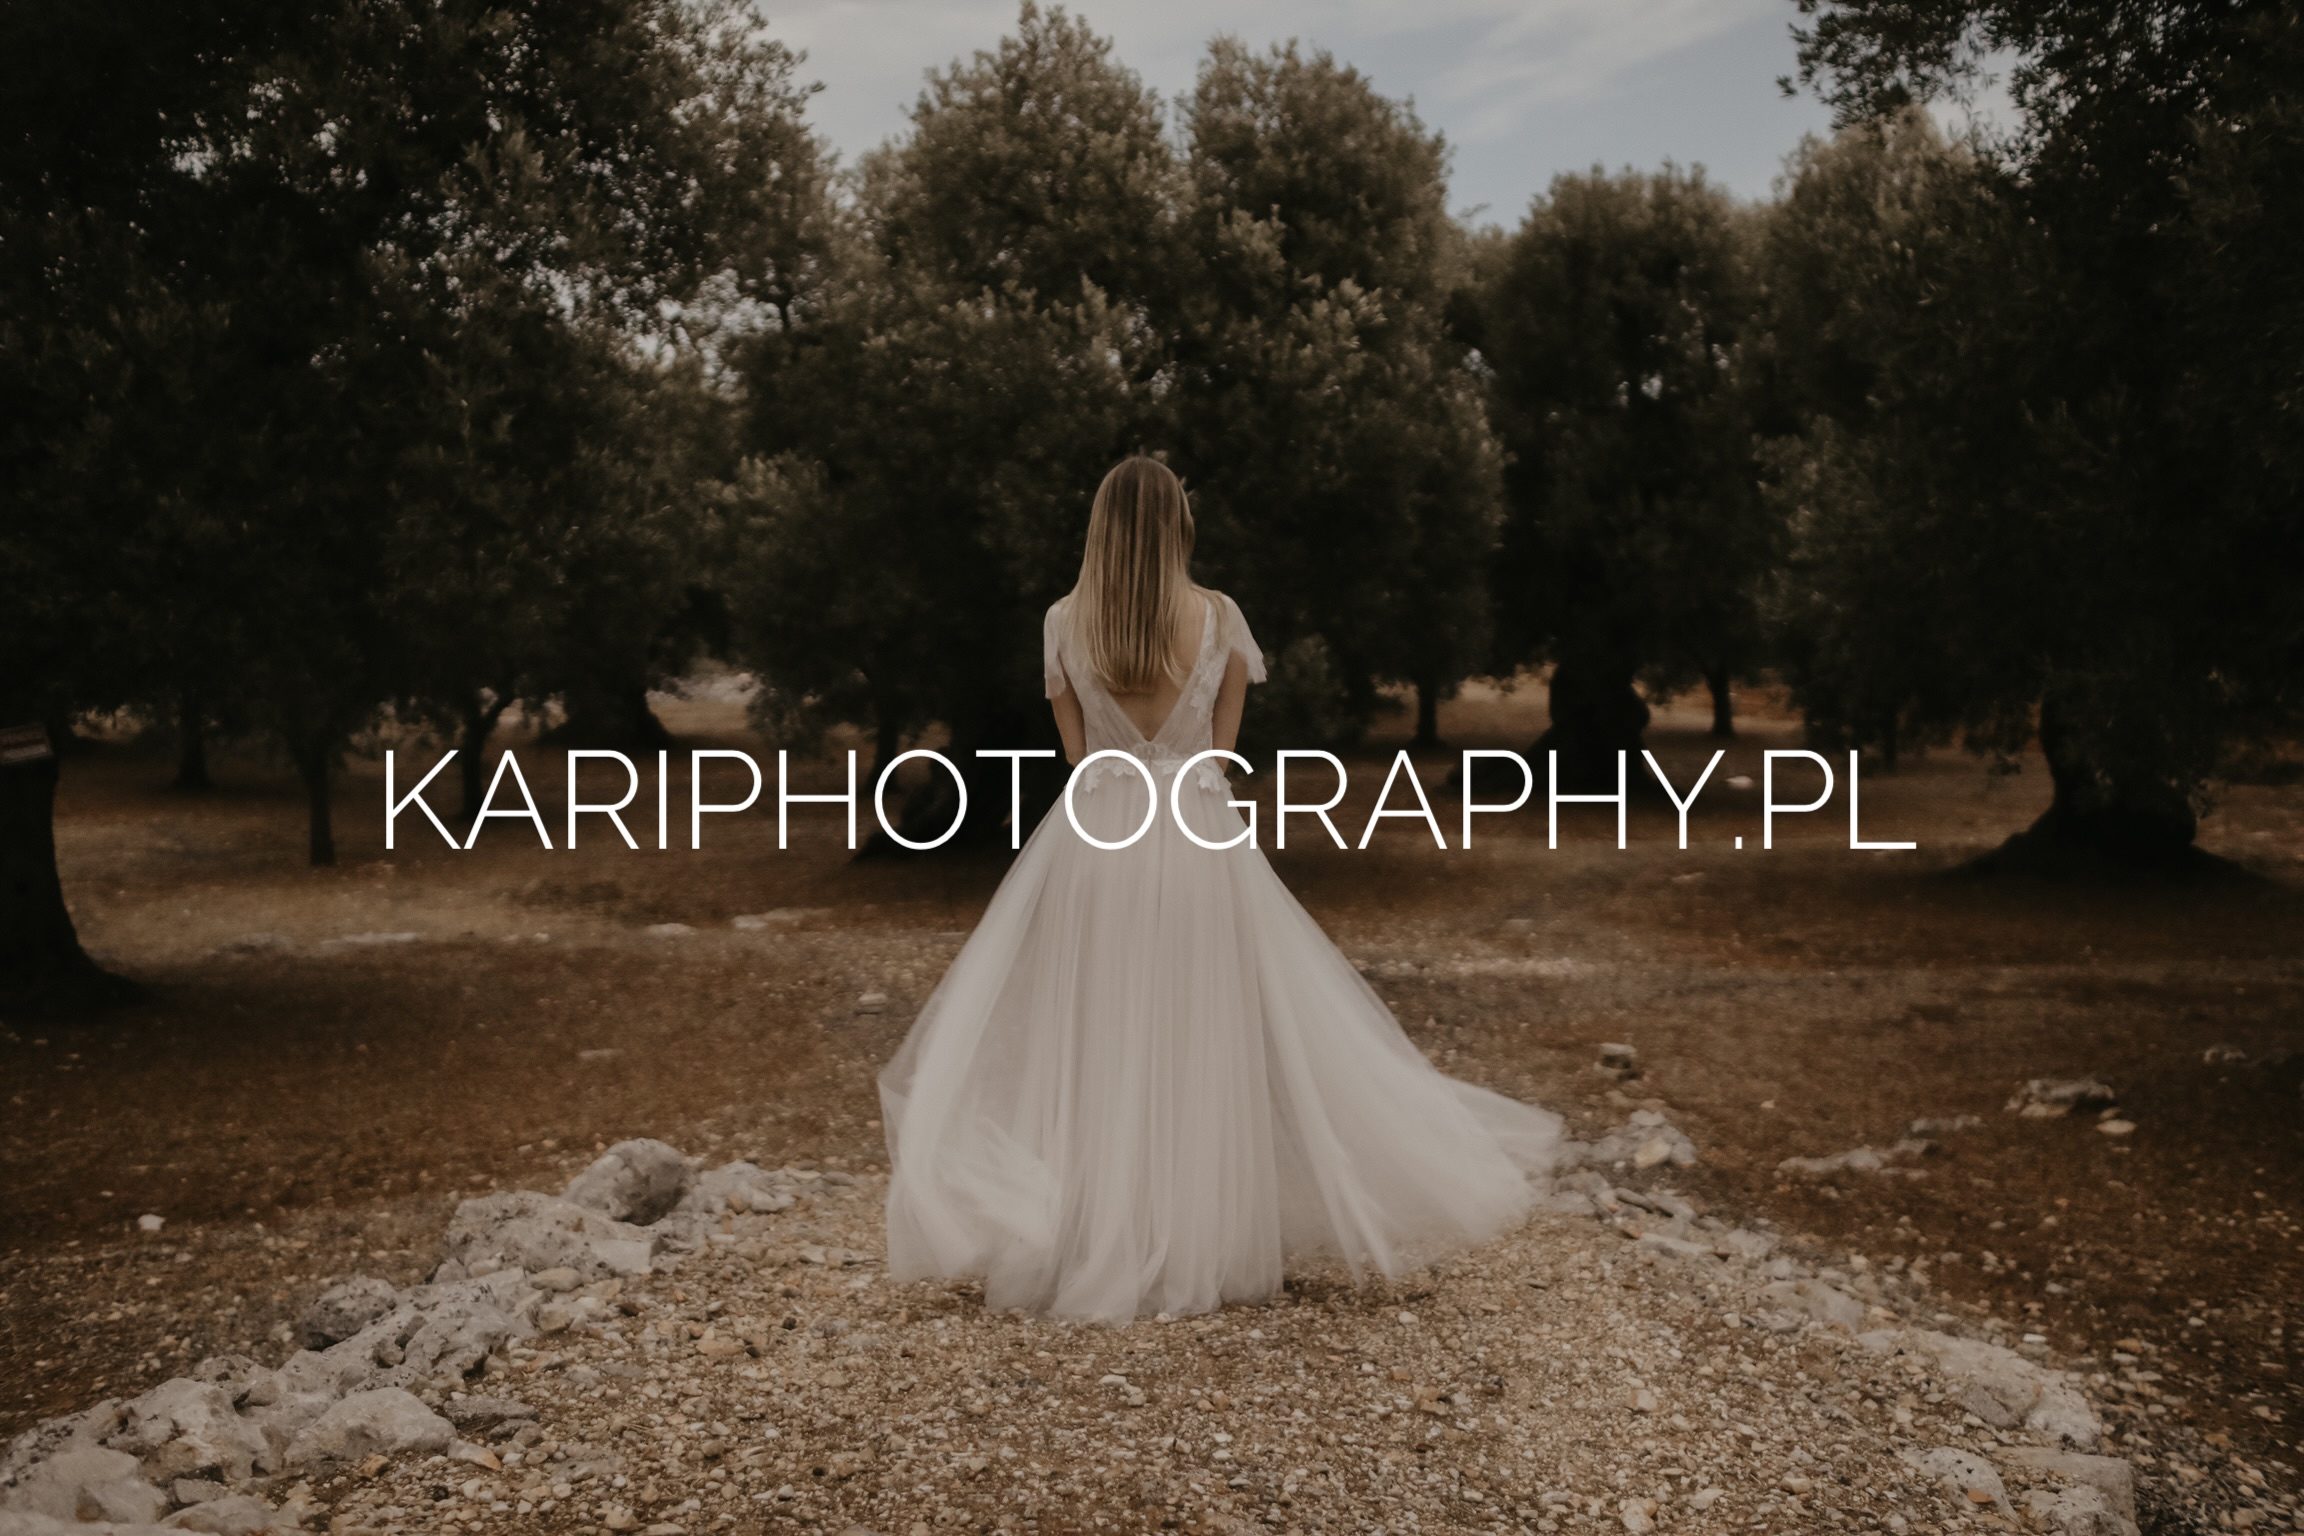 Kari Photography